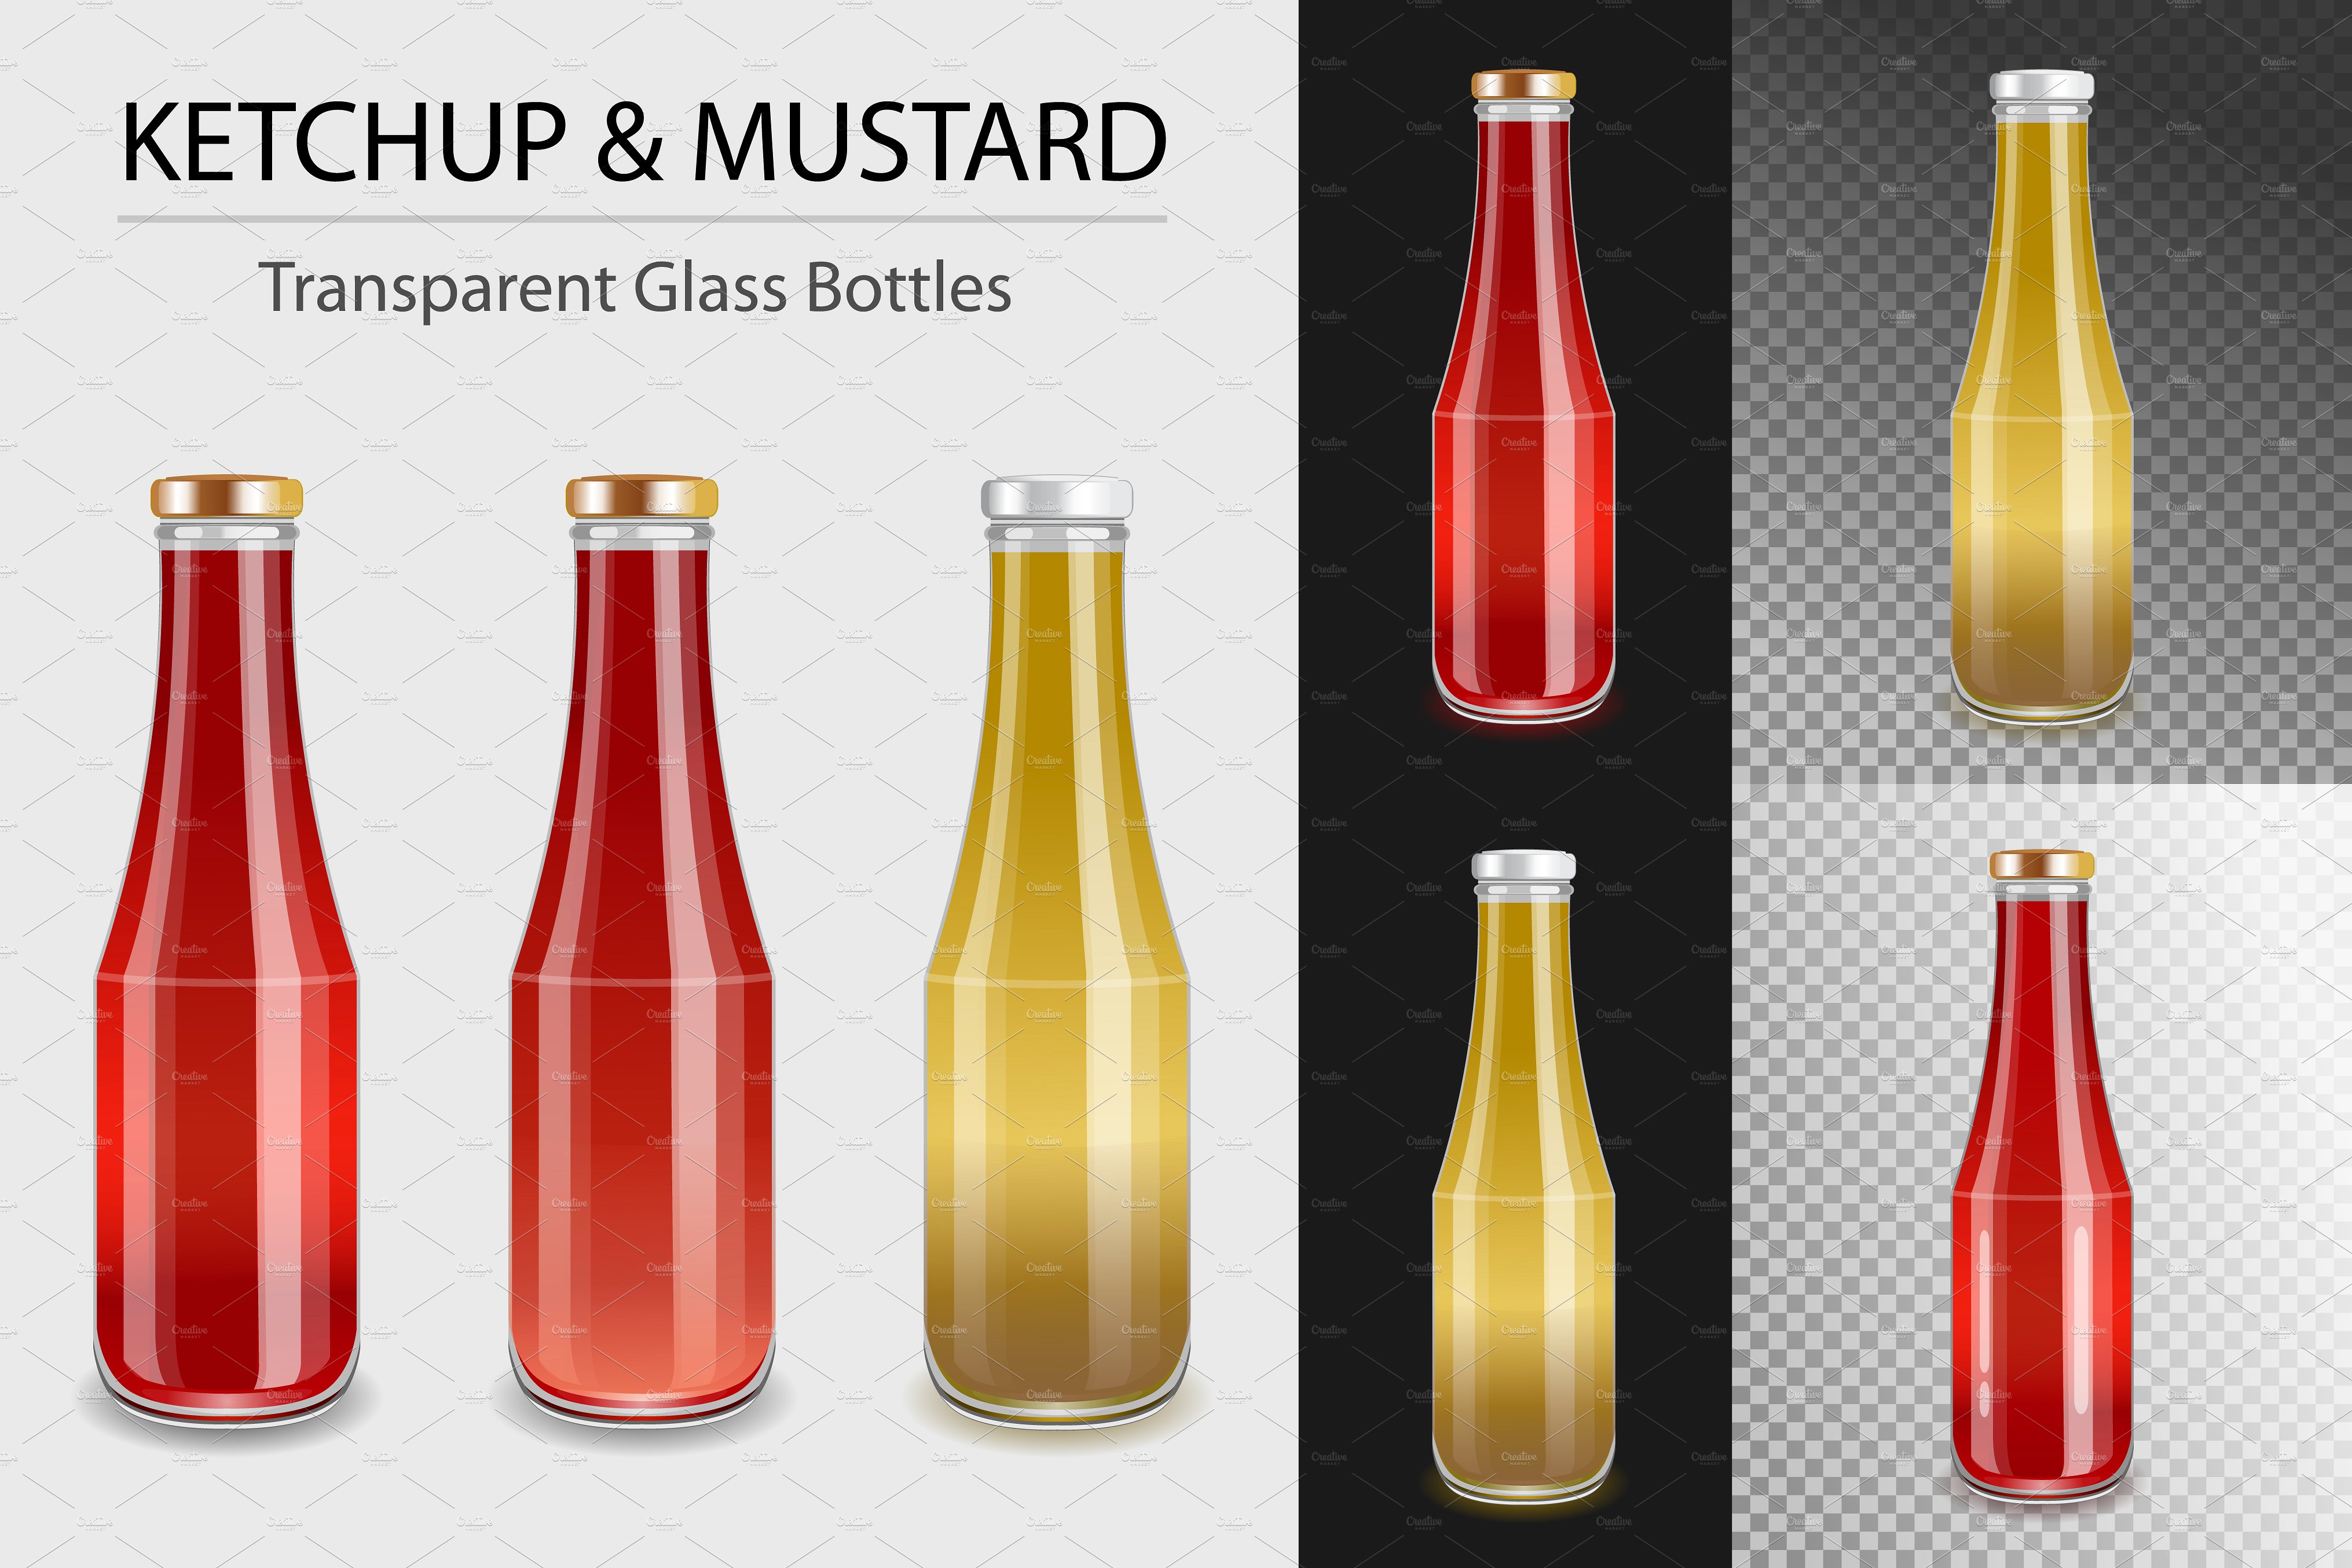 Ketchup and Mustard glass bottles. ~ Illustrations ~ Creative Market